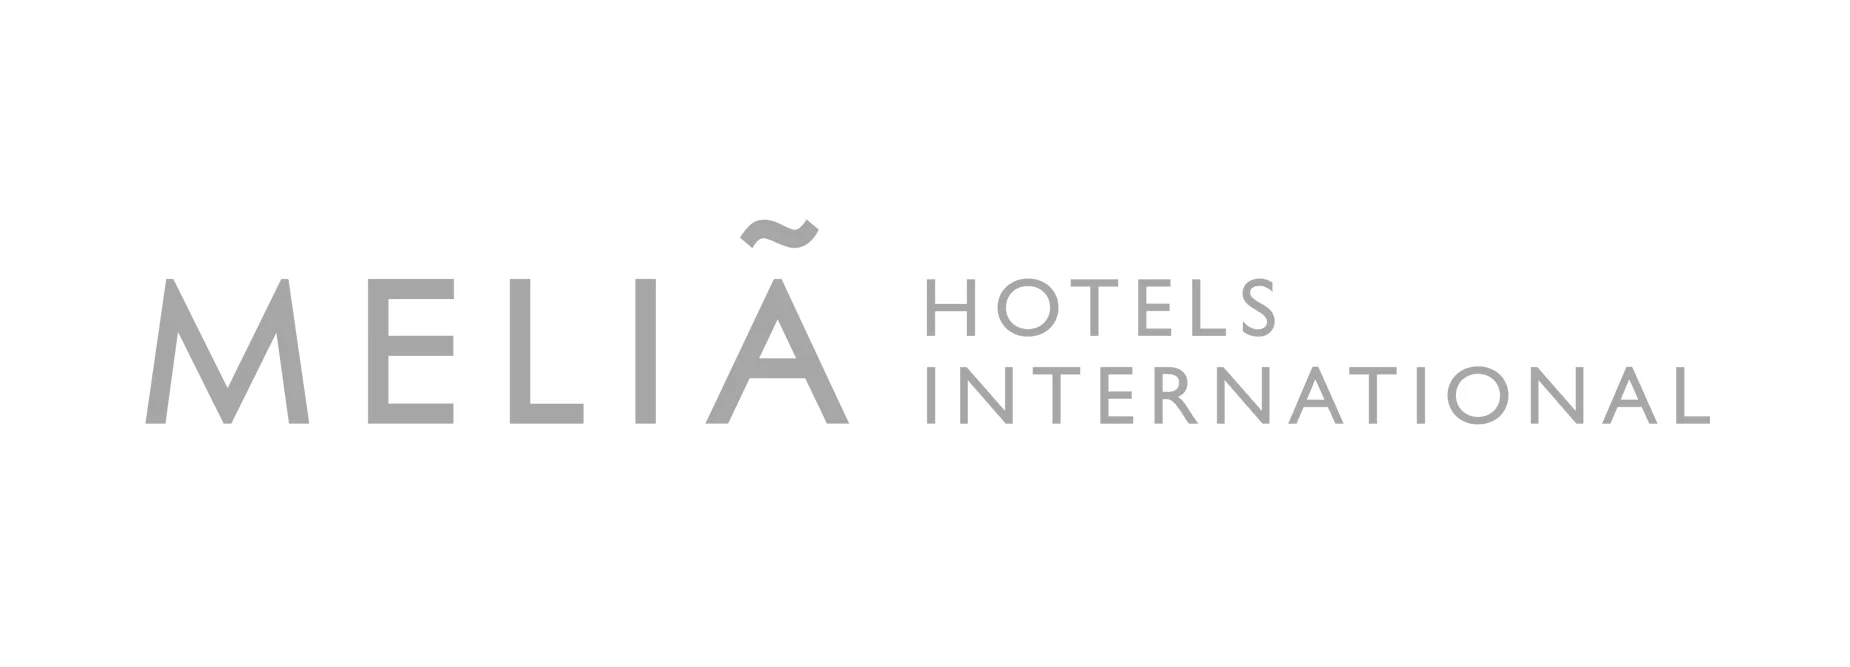 melia hotels international lp